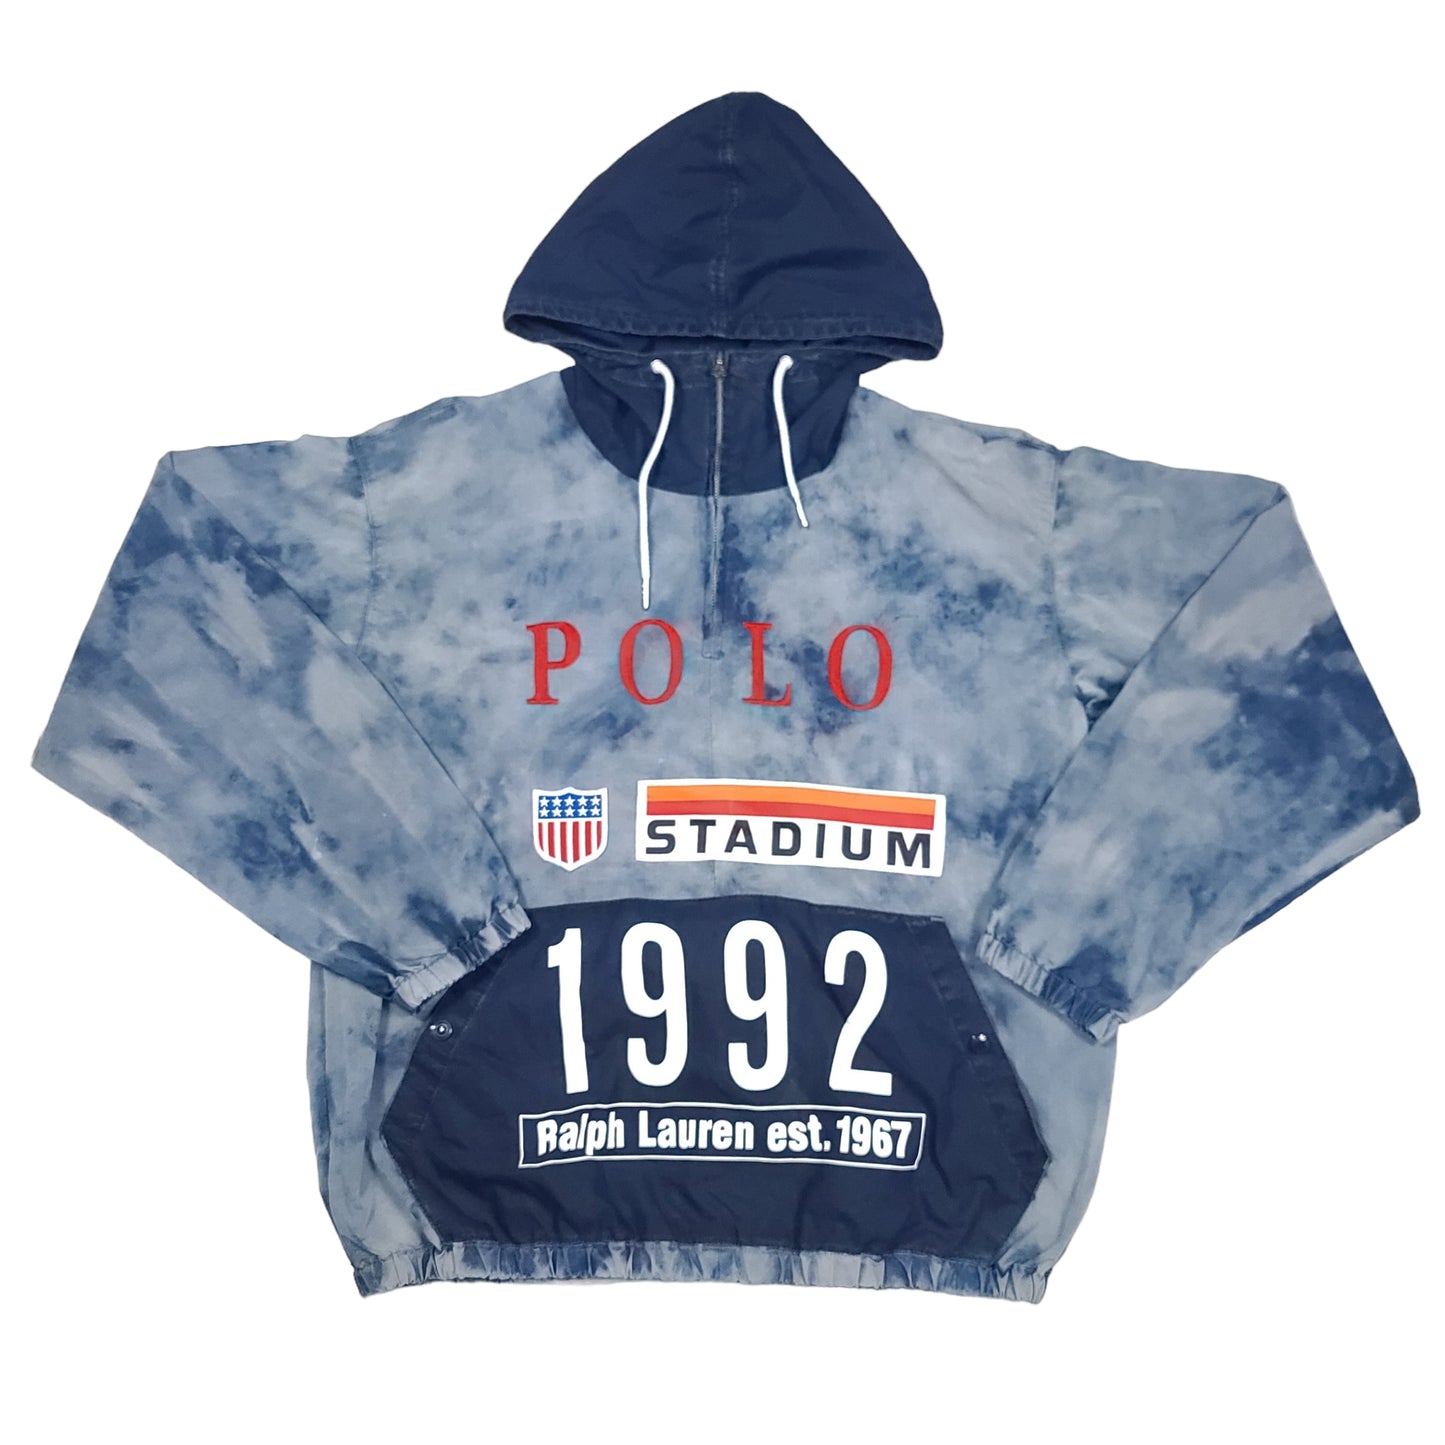 Polo Ralph Lauren Stadium 1992 Limited Edition Indigo Pullover Jacket